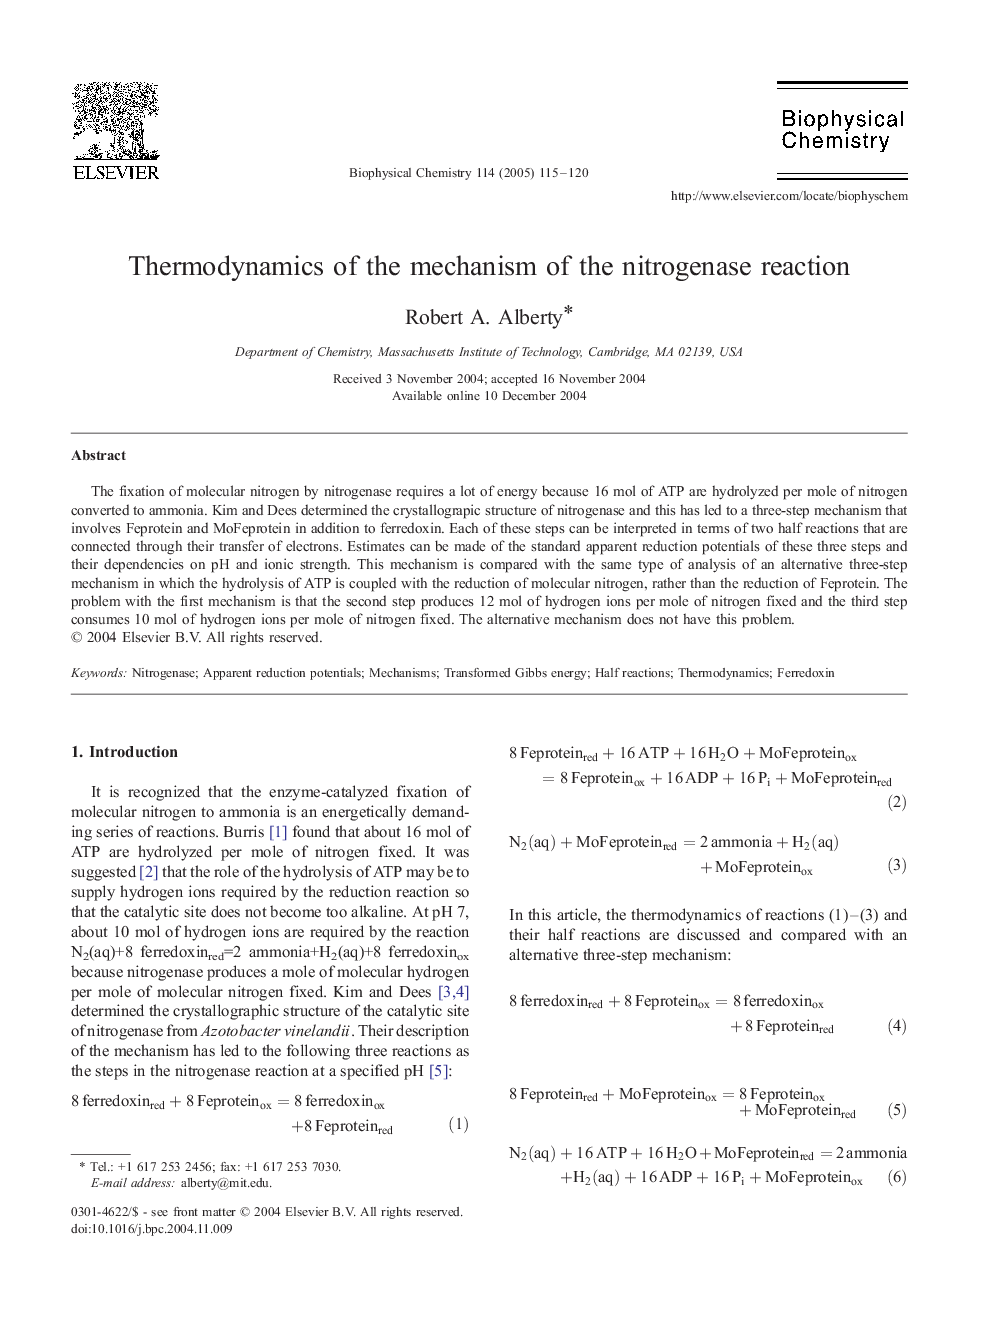 Thermodynamics of the mechanism of the nitrogenase reaction